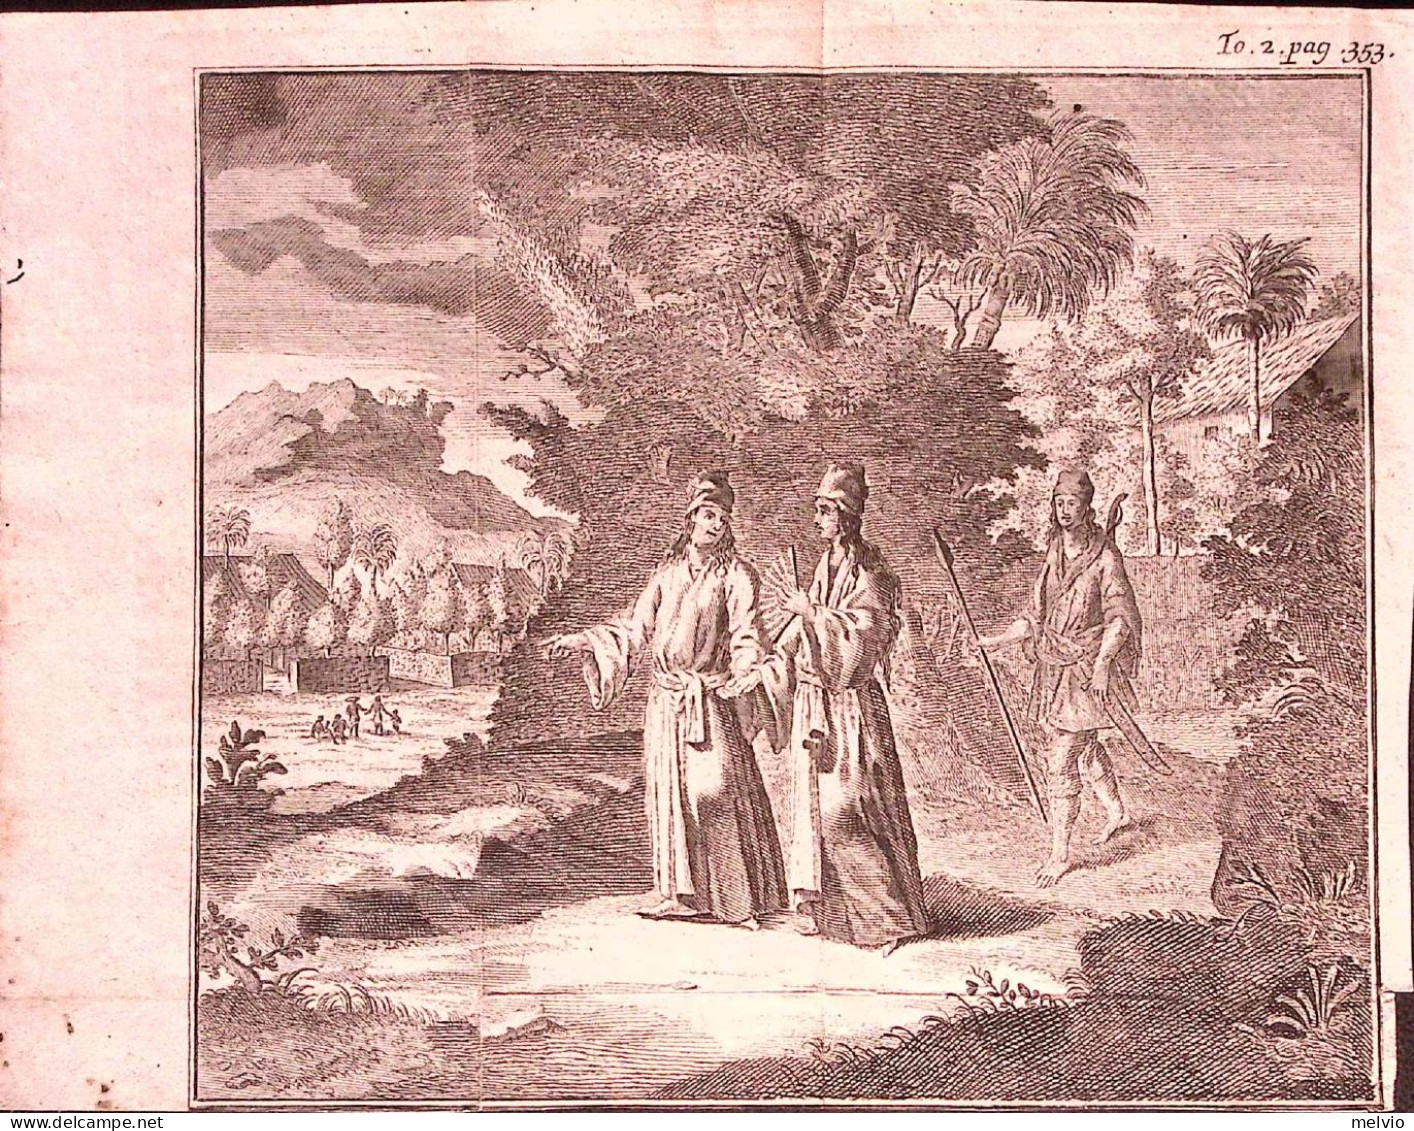 1730-Tirion Tonkin Vietnam Personaggi In Costume E Abitazioni Dim.19,5x16,5 Cm. - Prints & Engravings